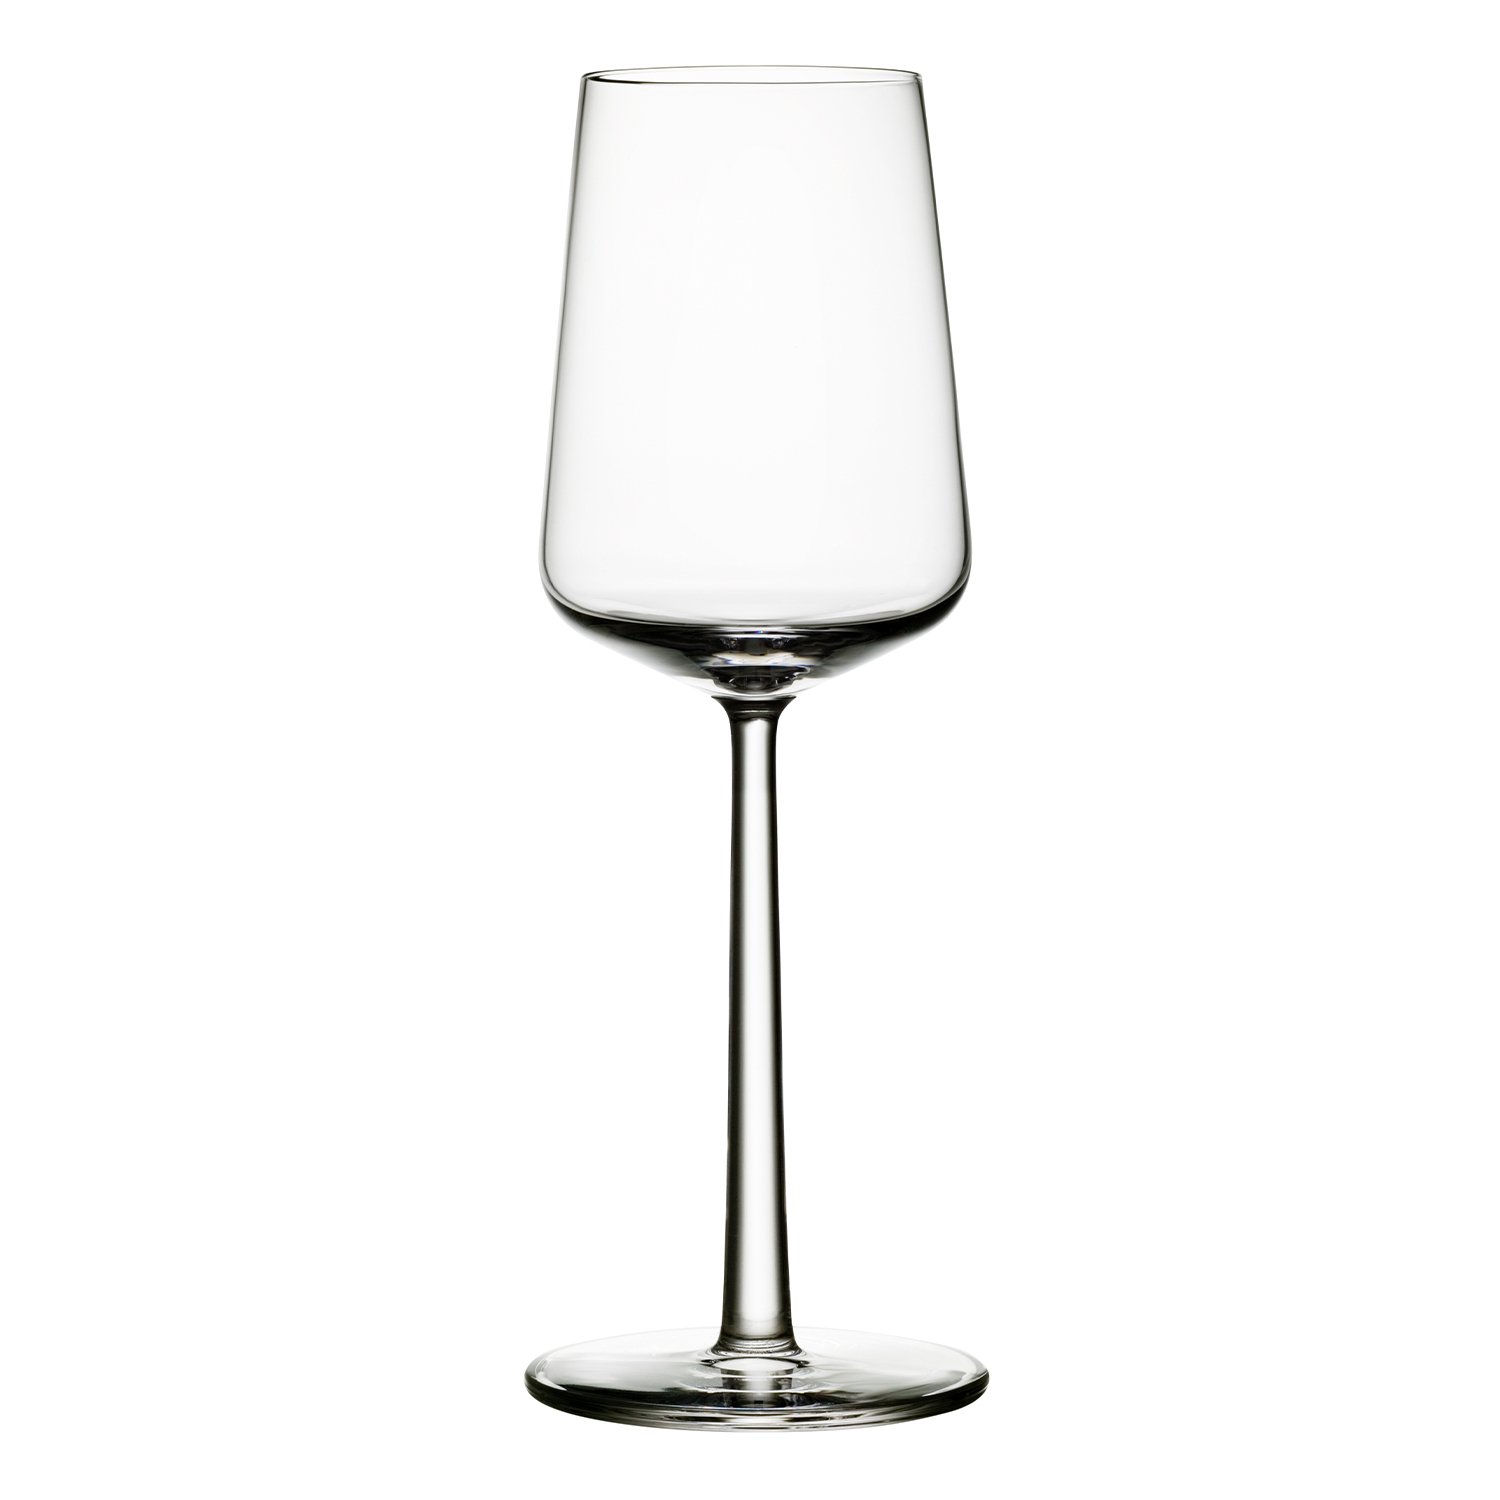 LV Inspired Tumbler Set  Diy wine glasses, Wine glass designs